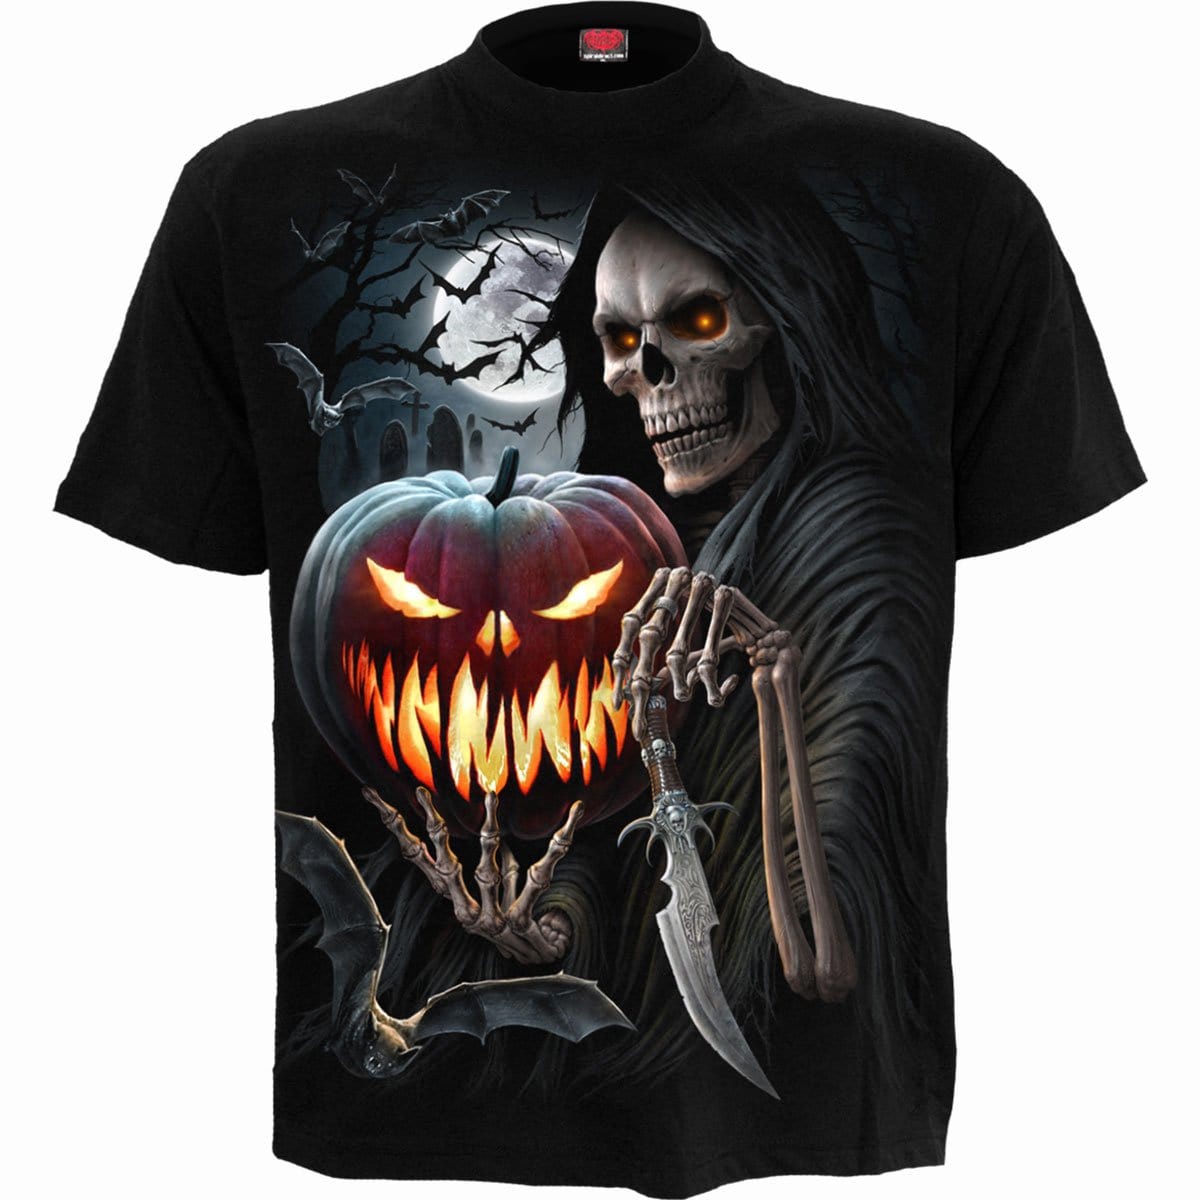 CARVING DEATH - T-Shirt Black - Spiral USA